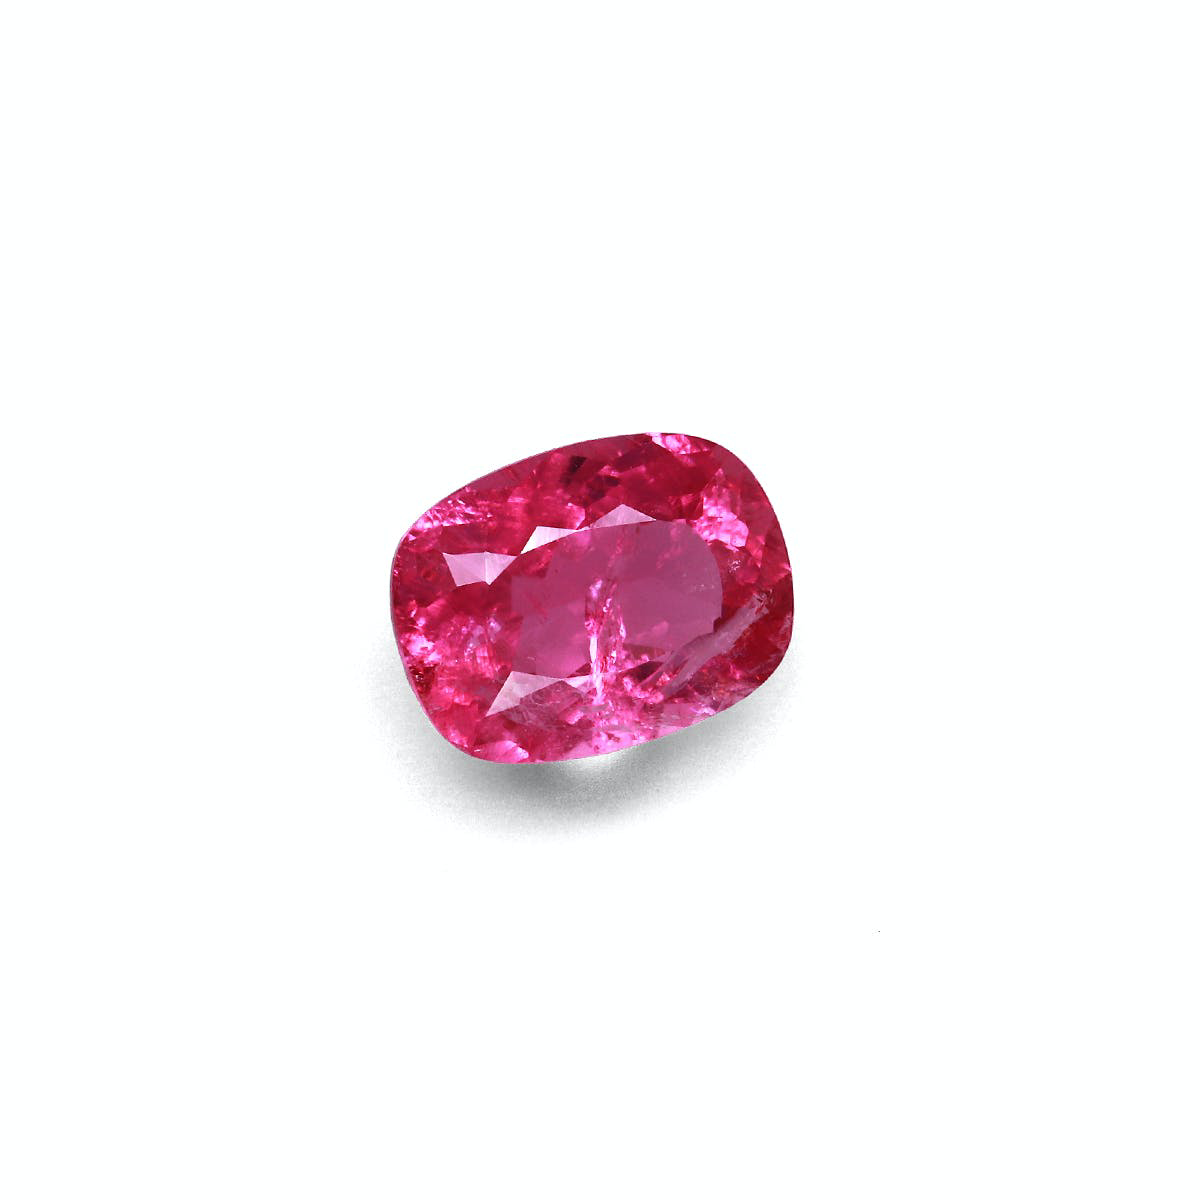 Picture of Vivid Pink Rubellite Tourmaline 3.33ct (RL0875)